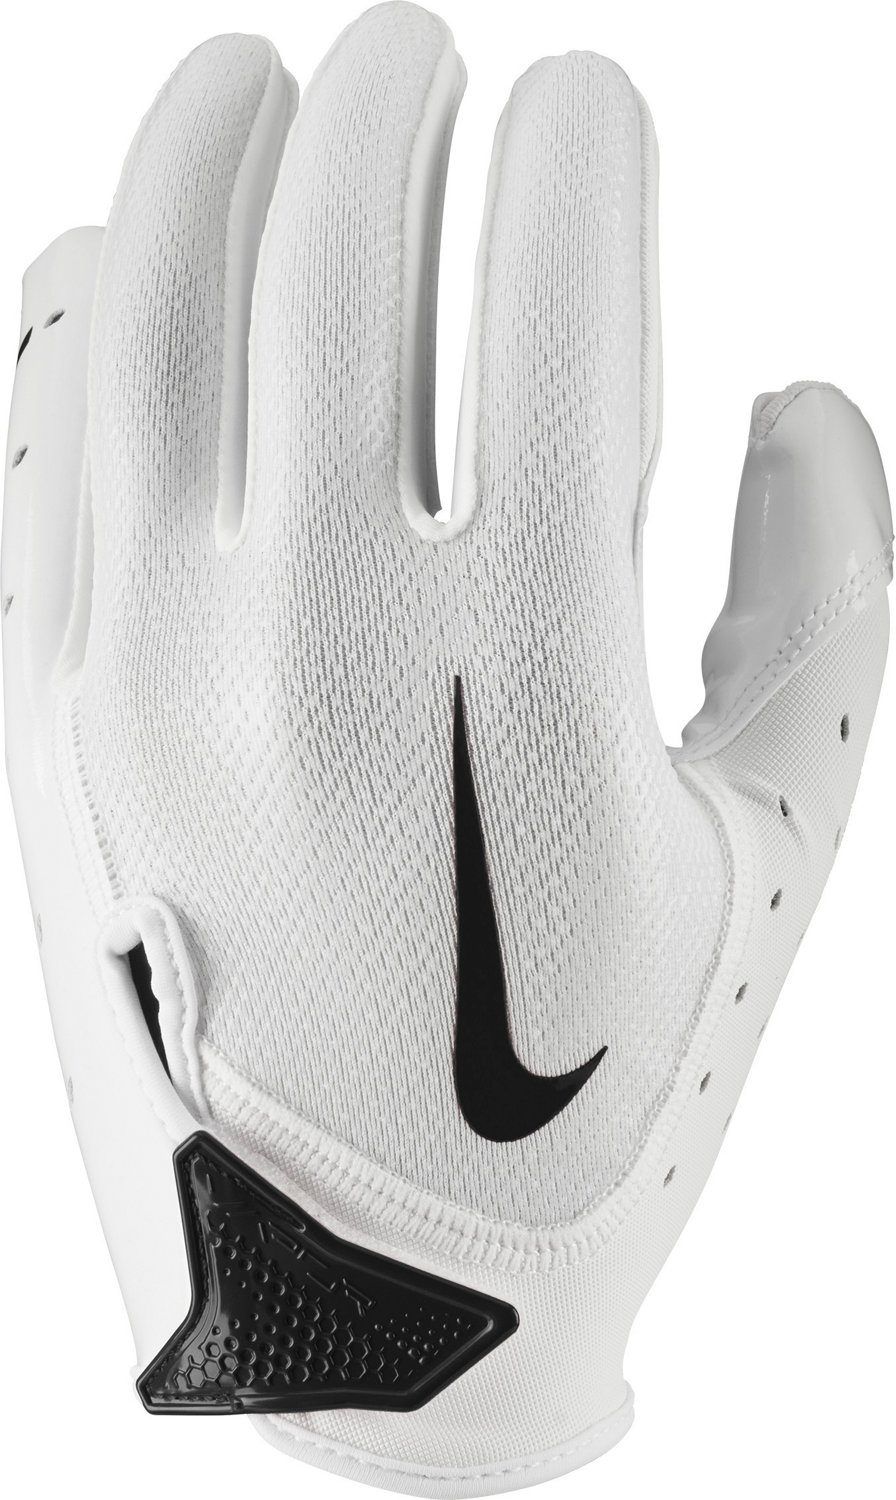 Nike Youth Vapor Jet 7.0 Football Gloves | Academy